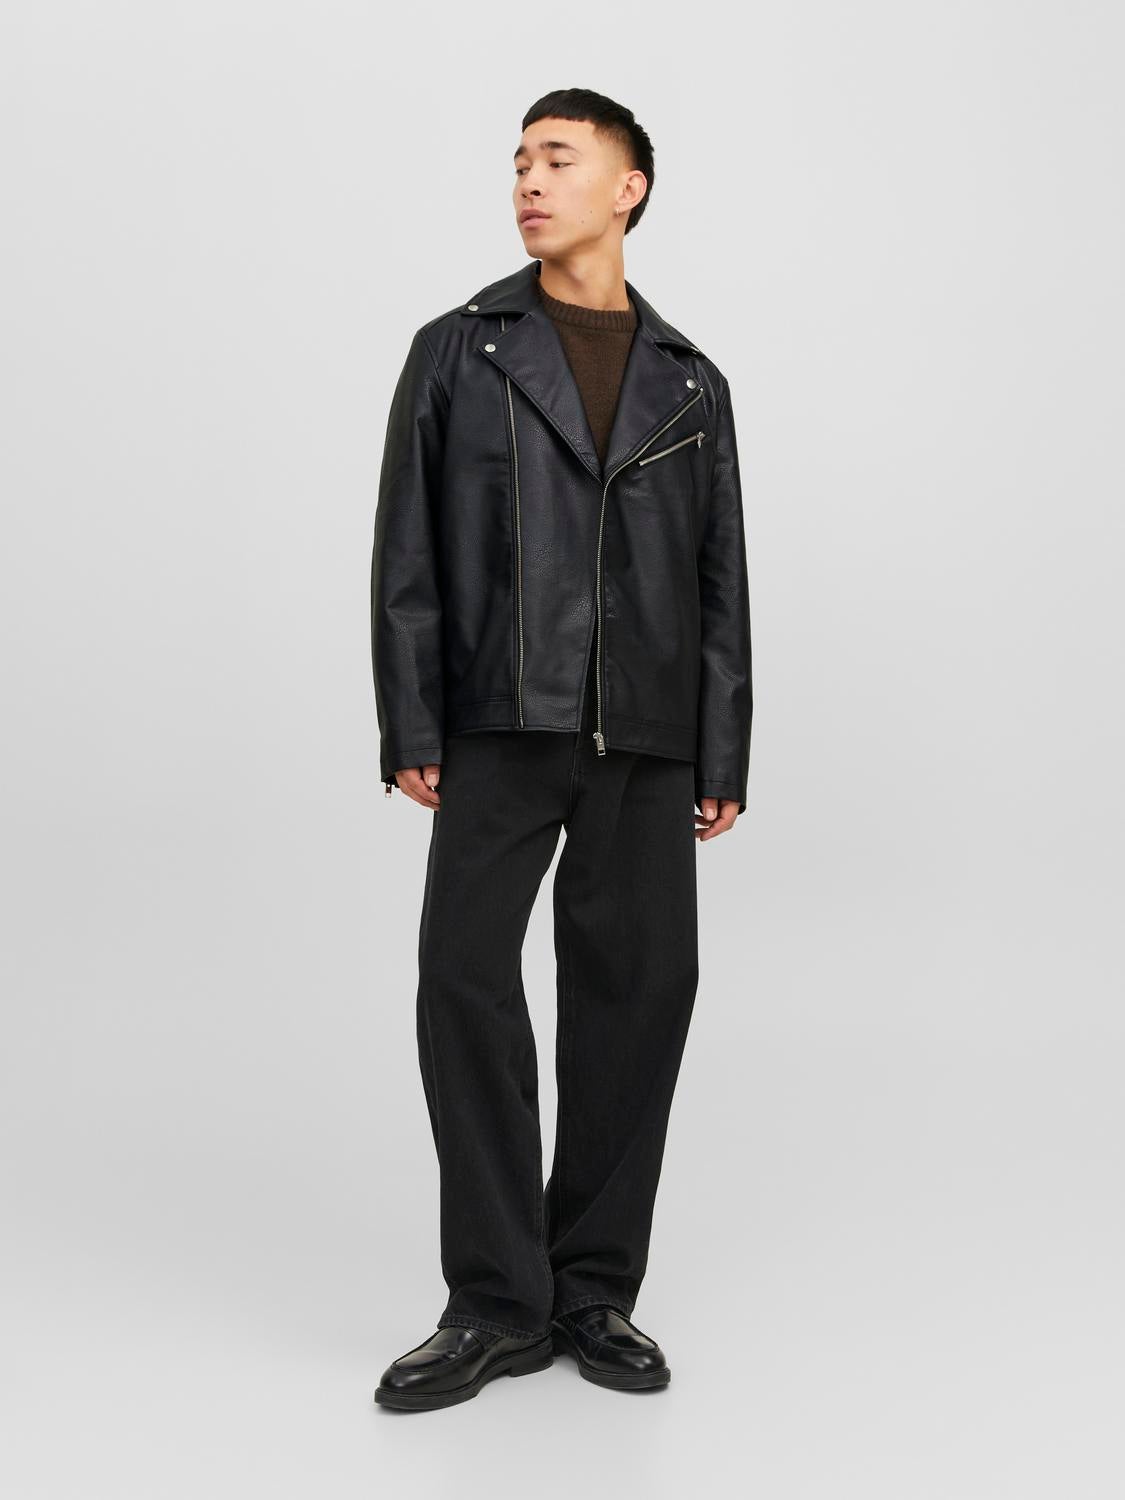 SEAMED JACKET - Jackets - MAN | ZARA United States | Zara man jacket, Mens  jackets, Faux leather jacket men